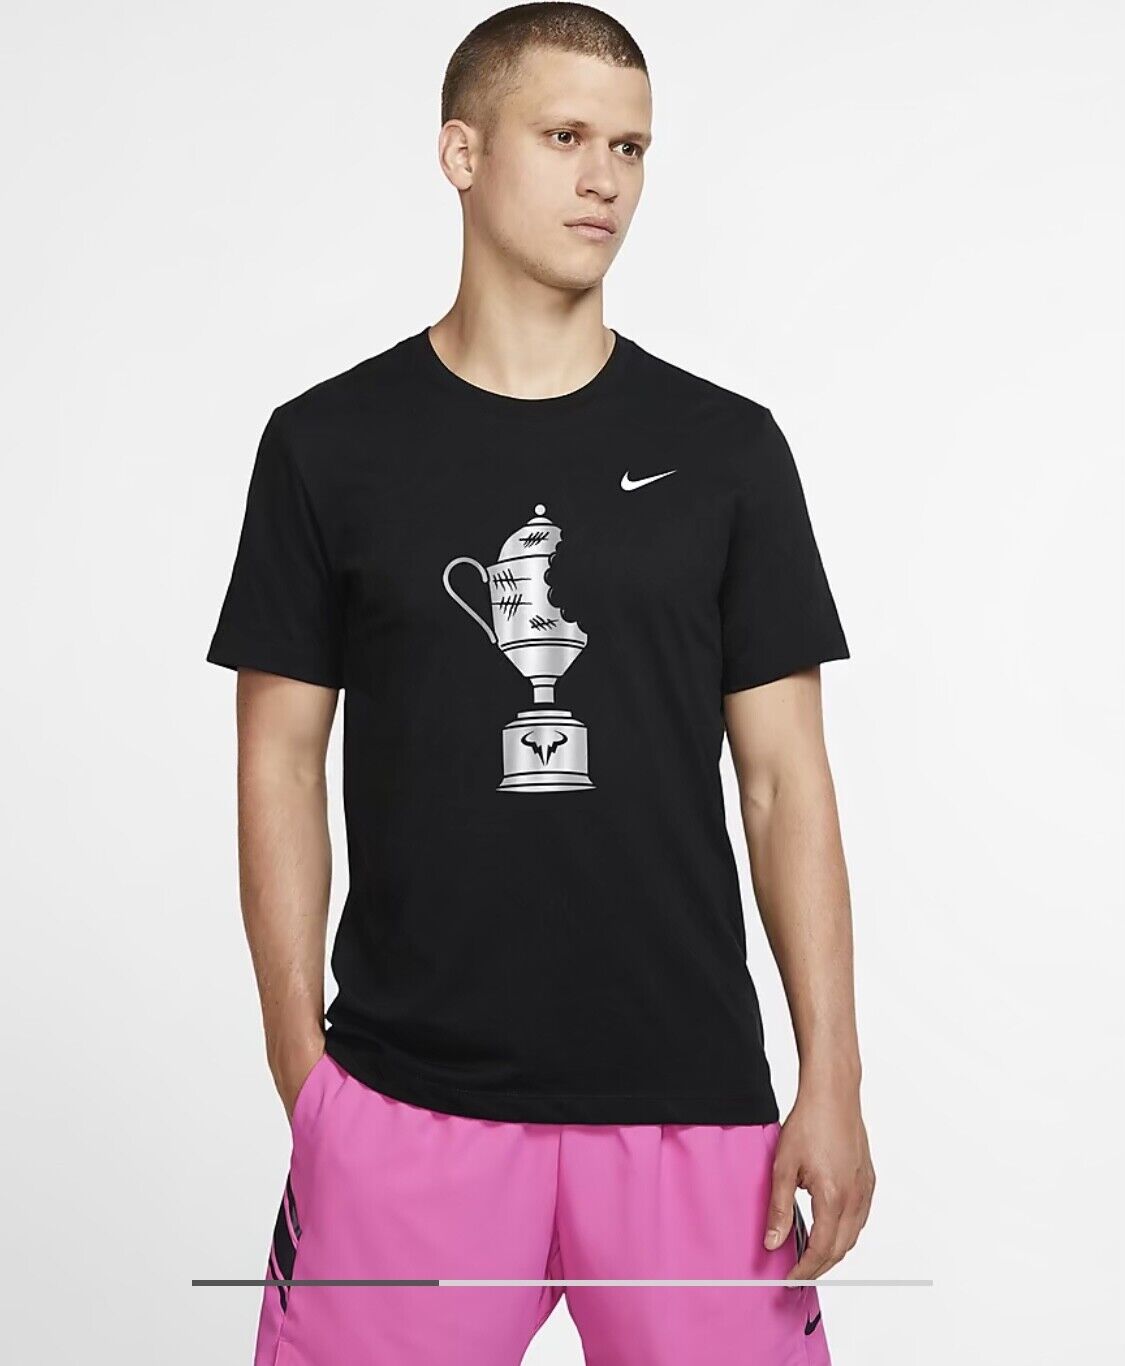 Roger Federer Men's Shirt The Tee Blue Short Sleeve Athletic Cut Size XXL